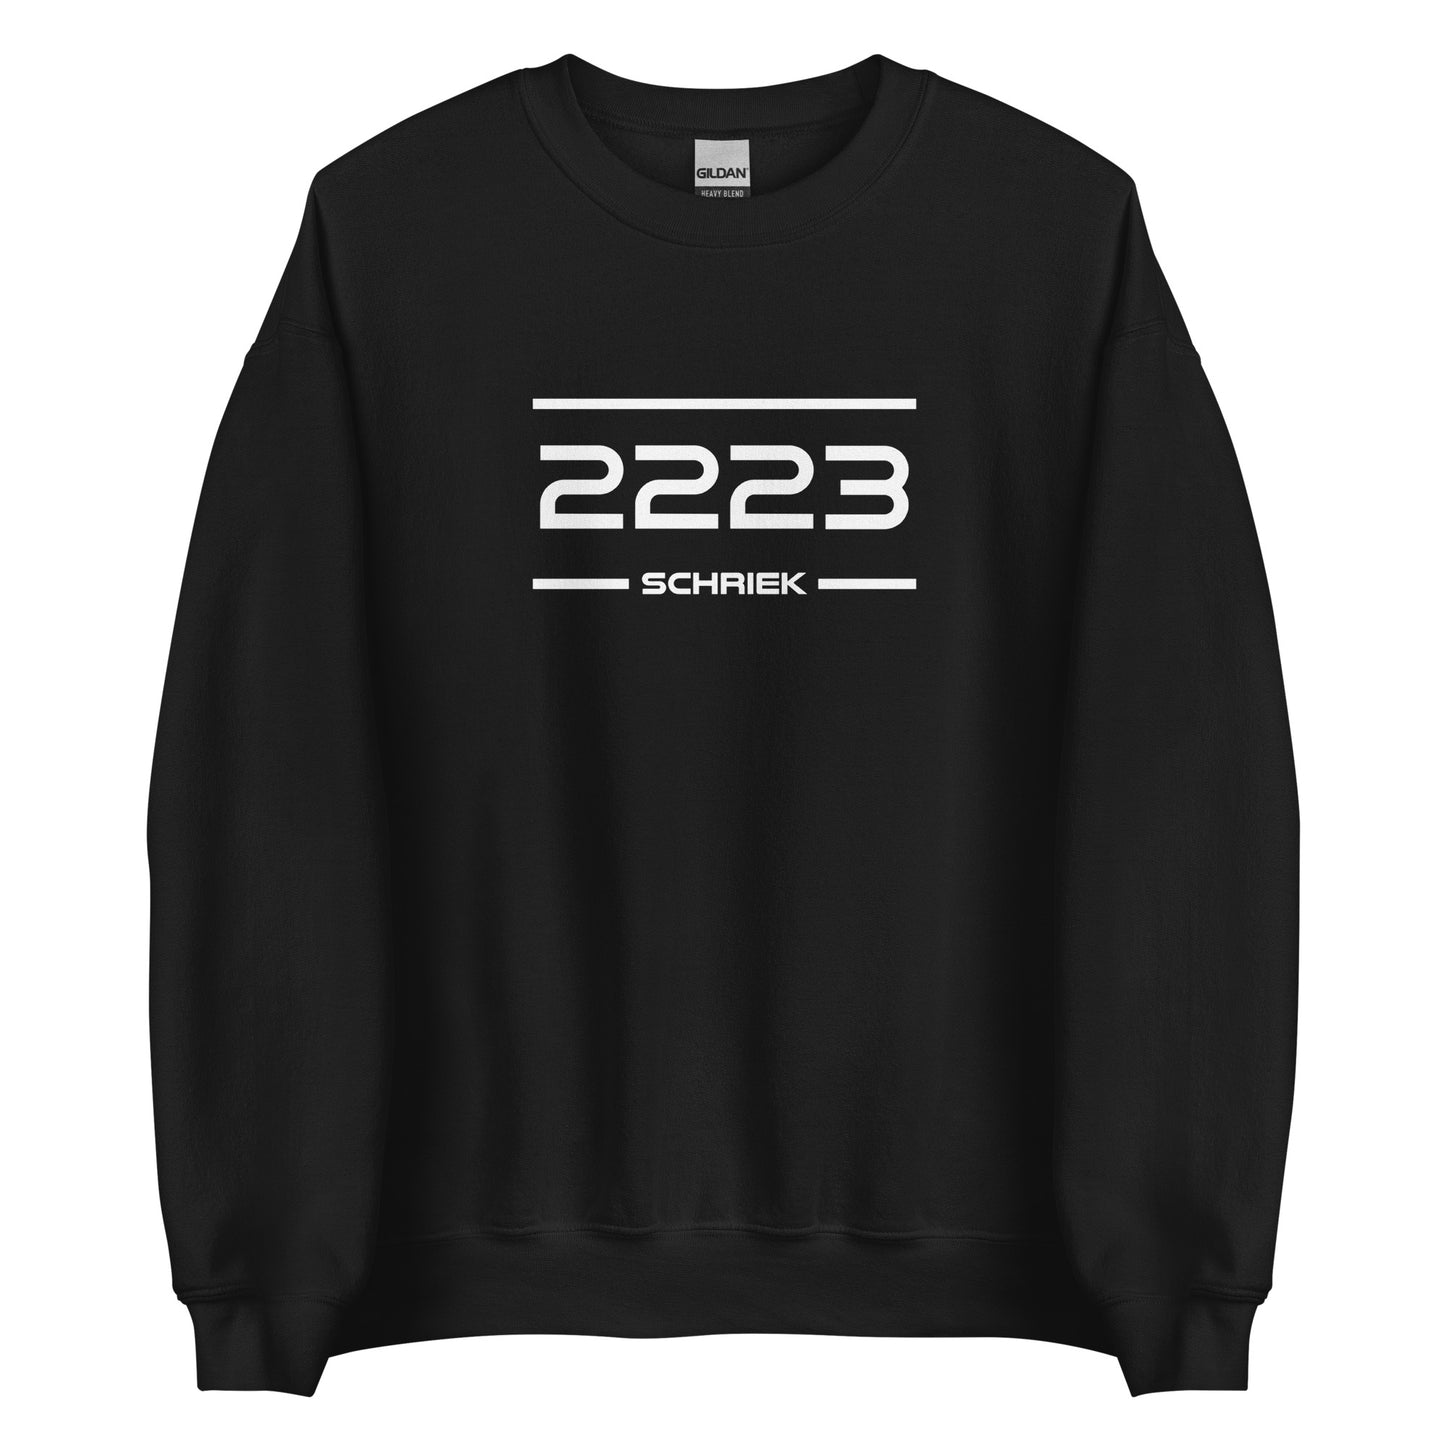 Sweater - 2223 - Schriek (M/V)